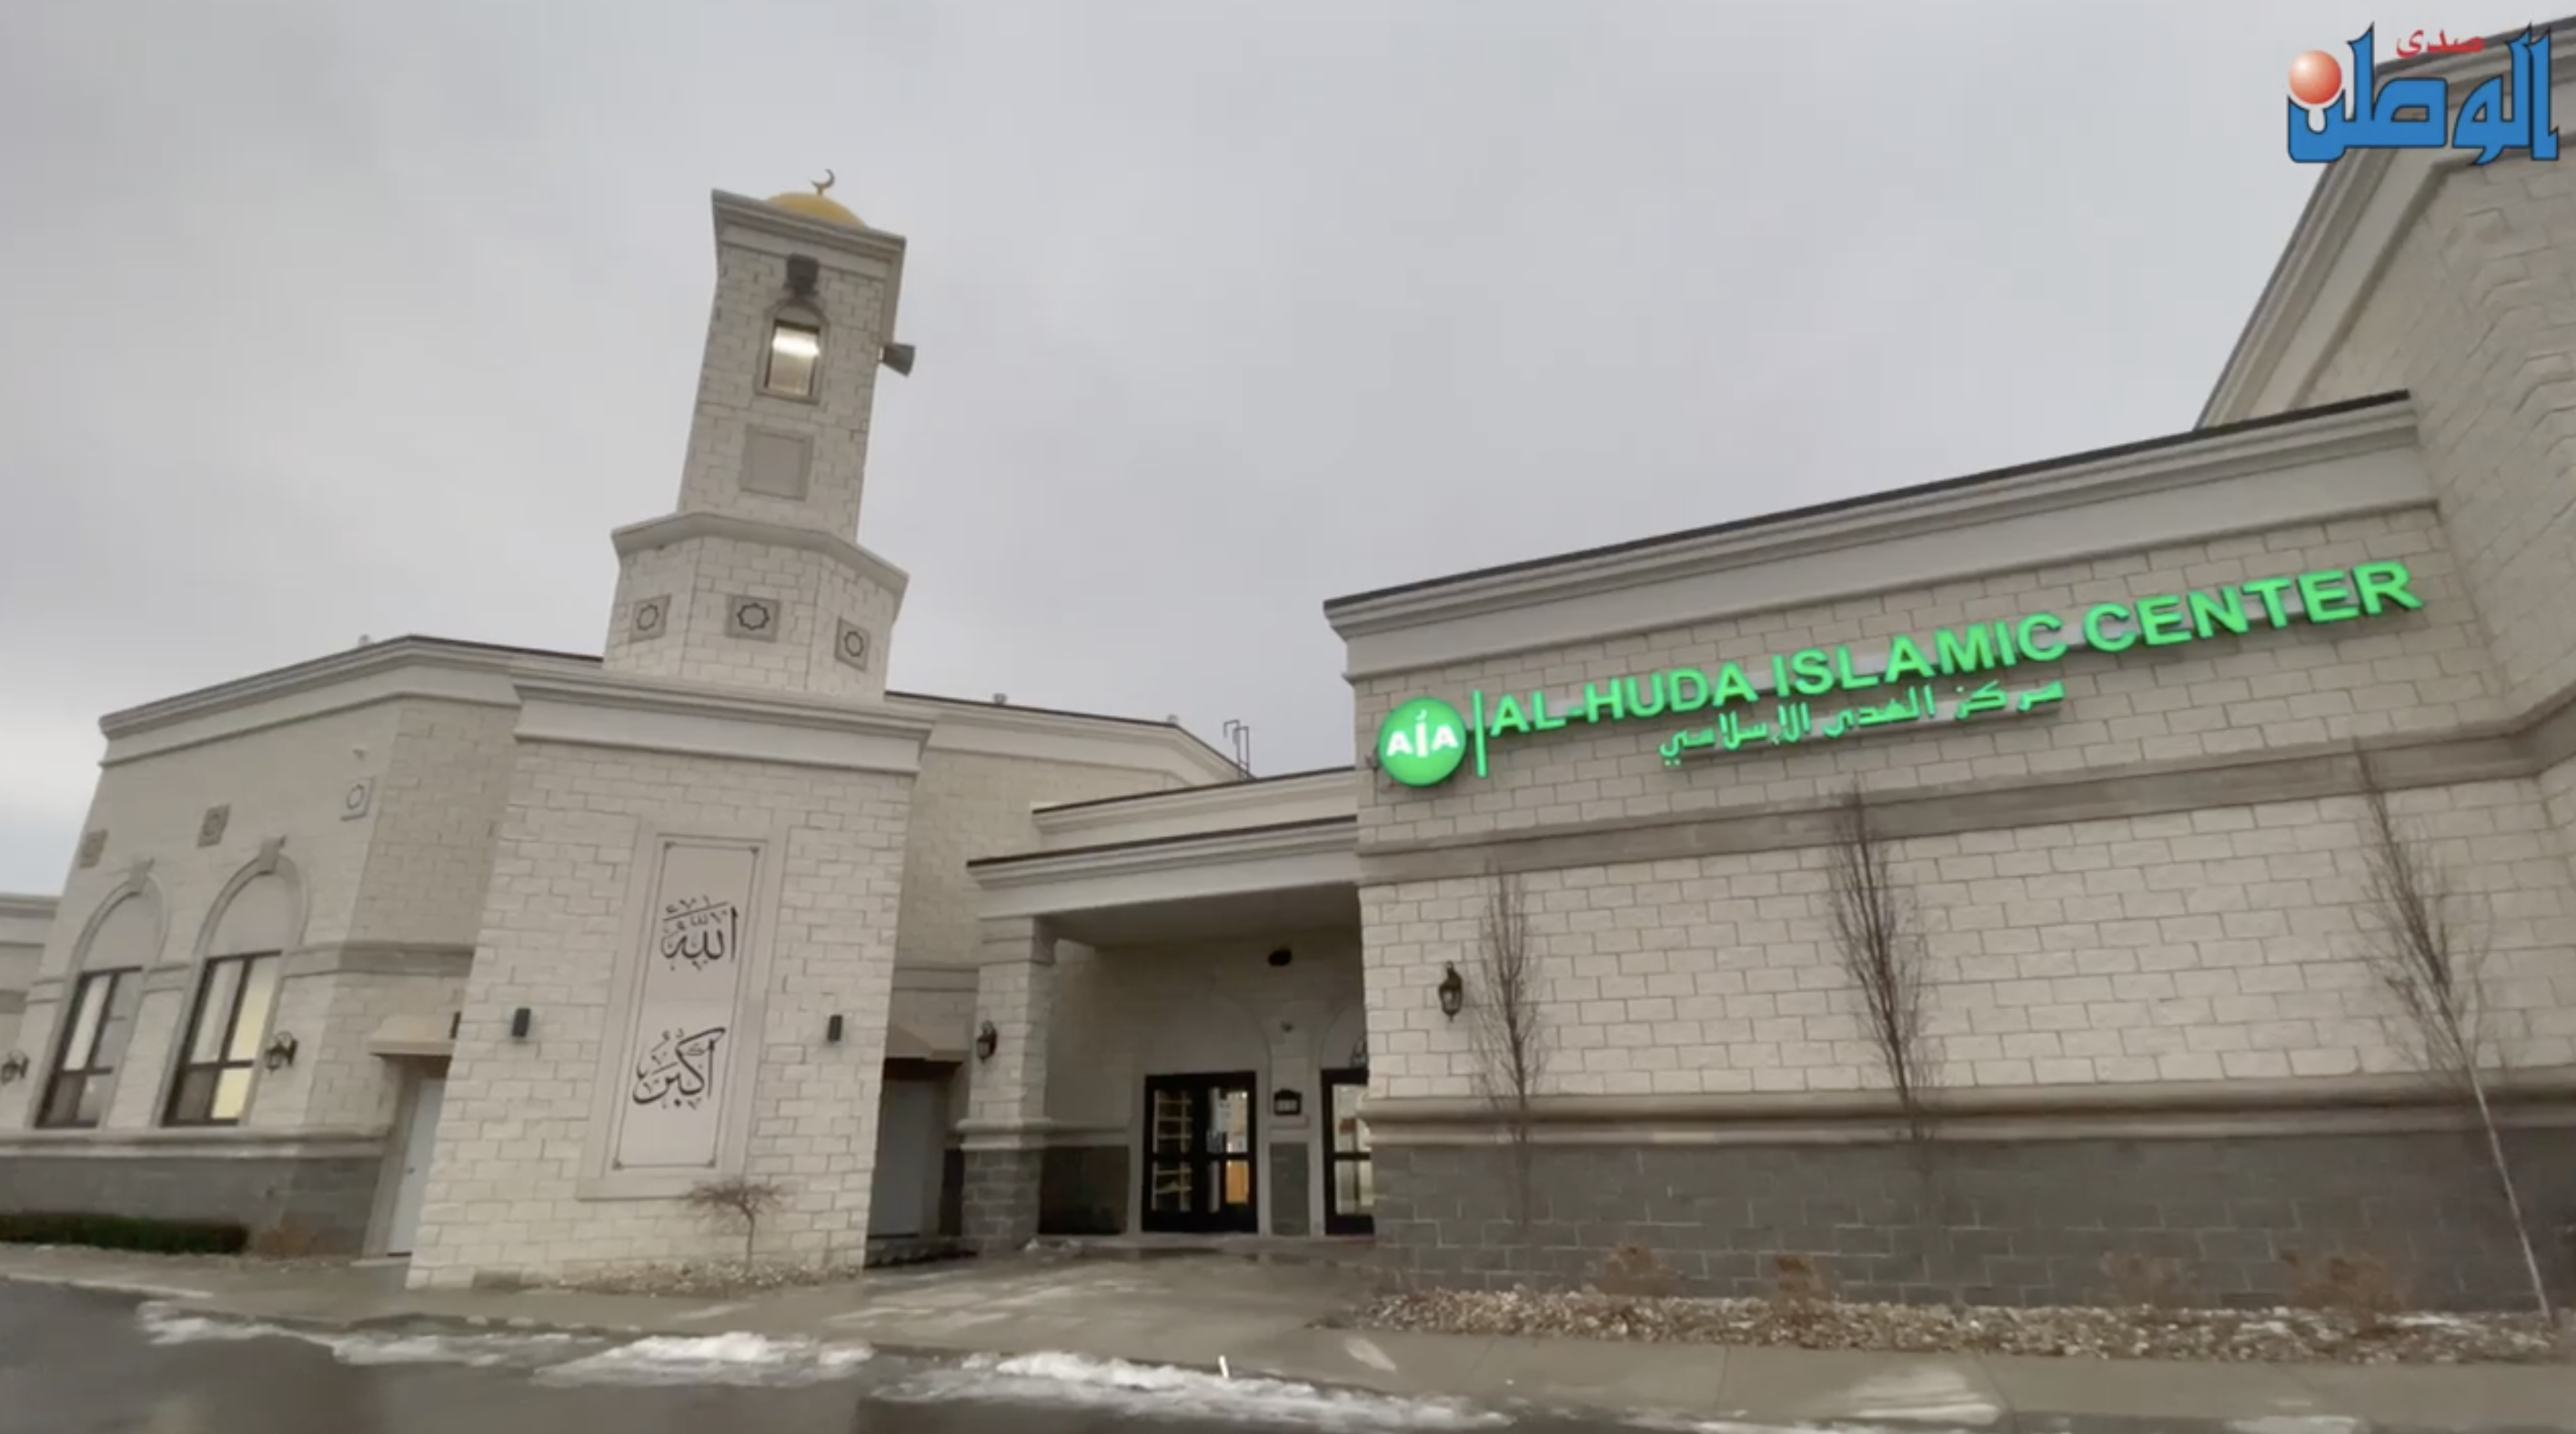 Al-Huda Islamic Center in Dearborn